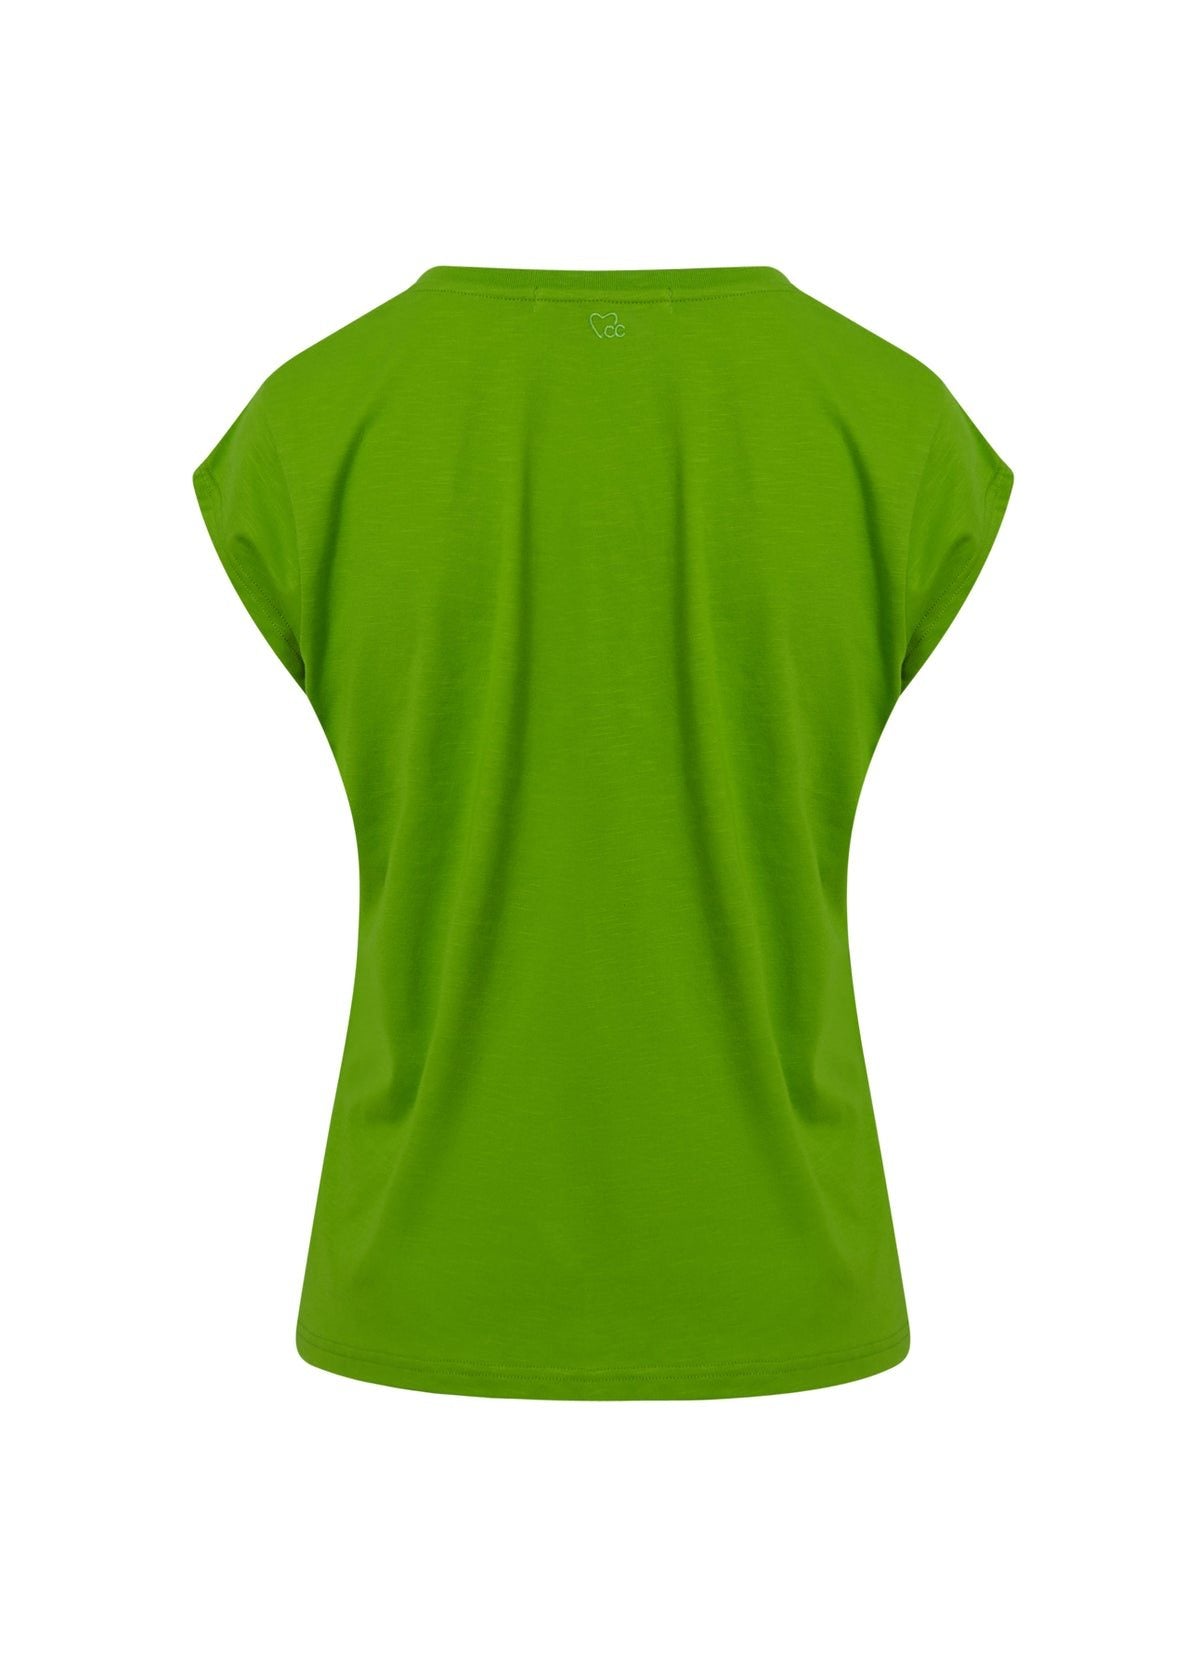 shirt | CC1101 - flashy green